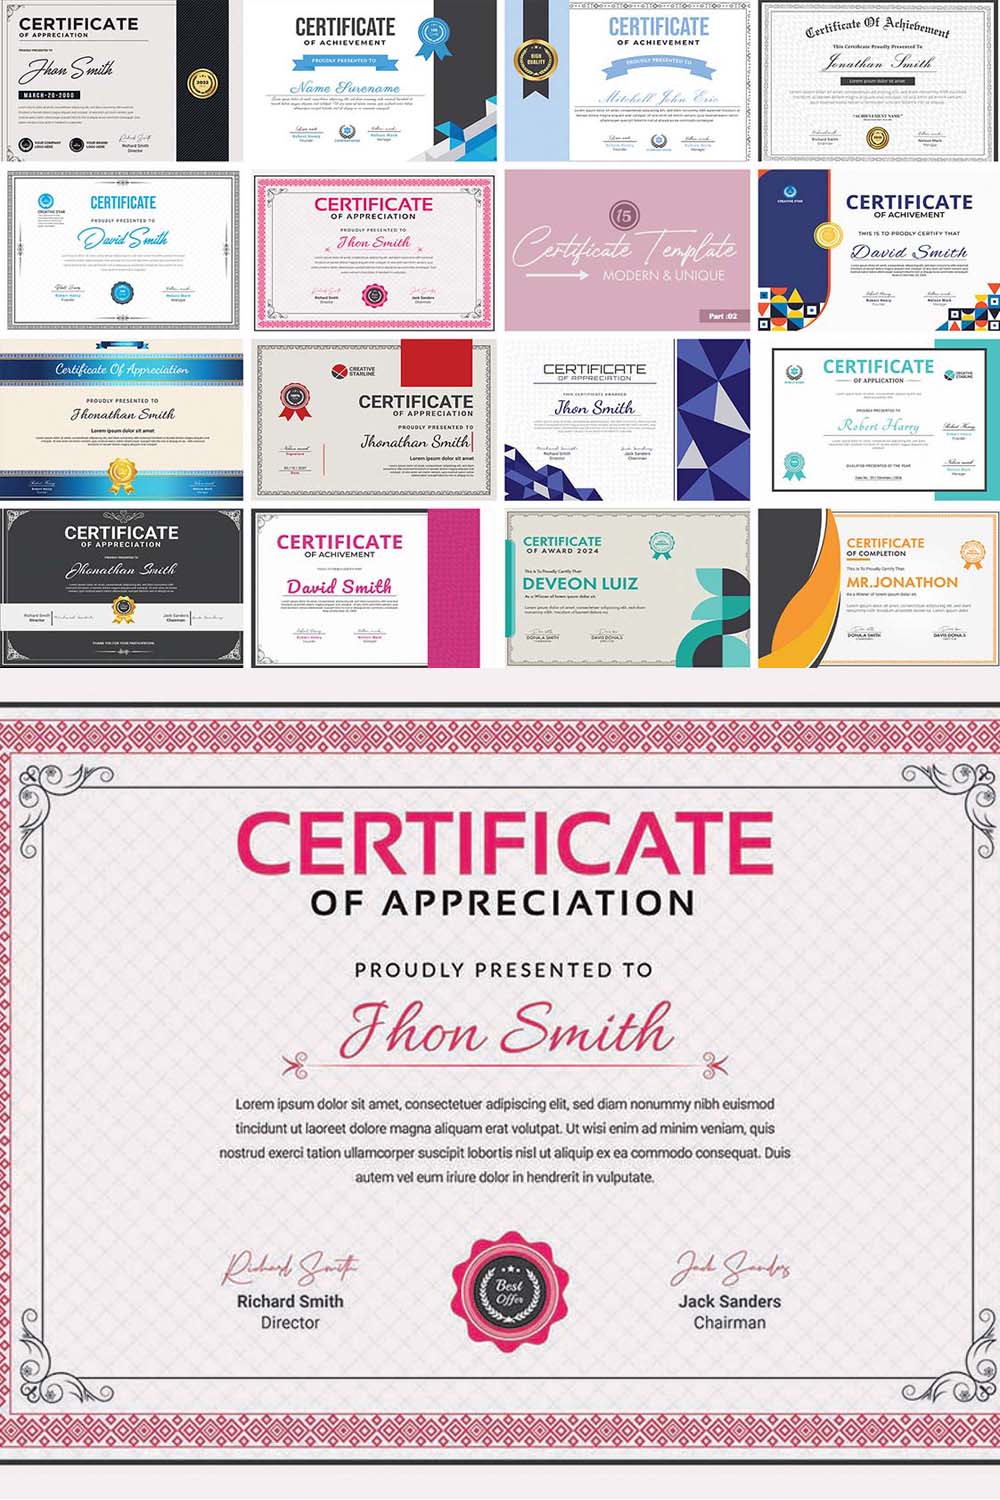 Elegant Certificate Design Template pinterest preview image.